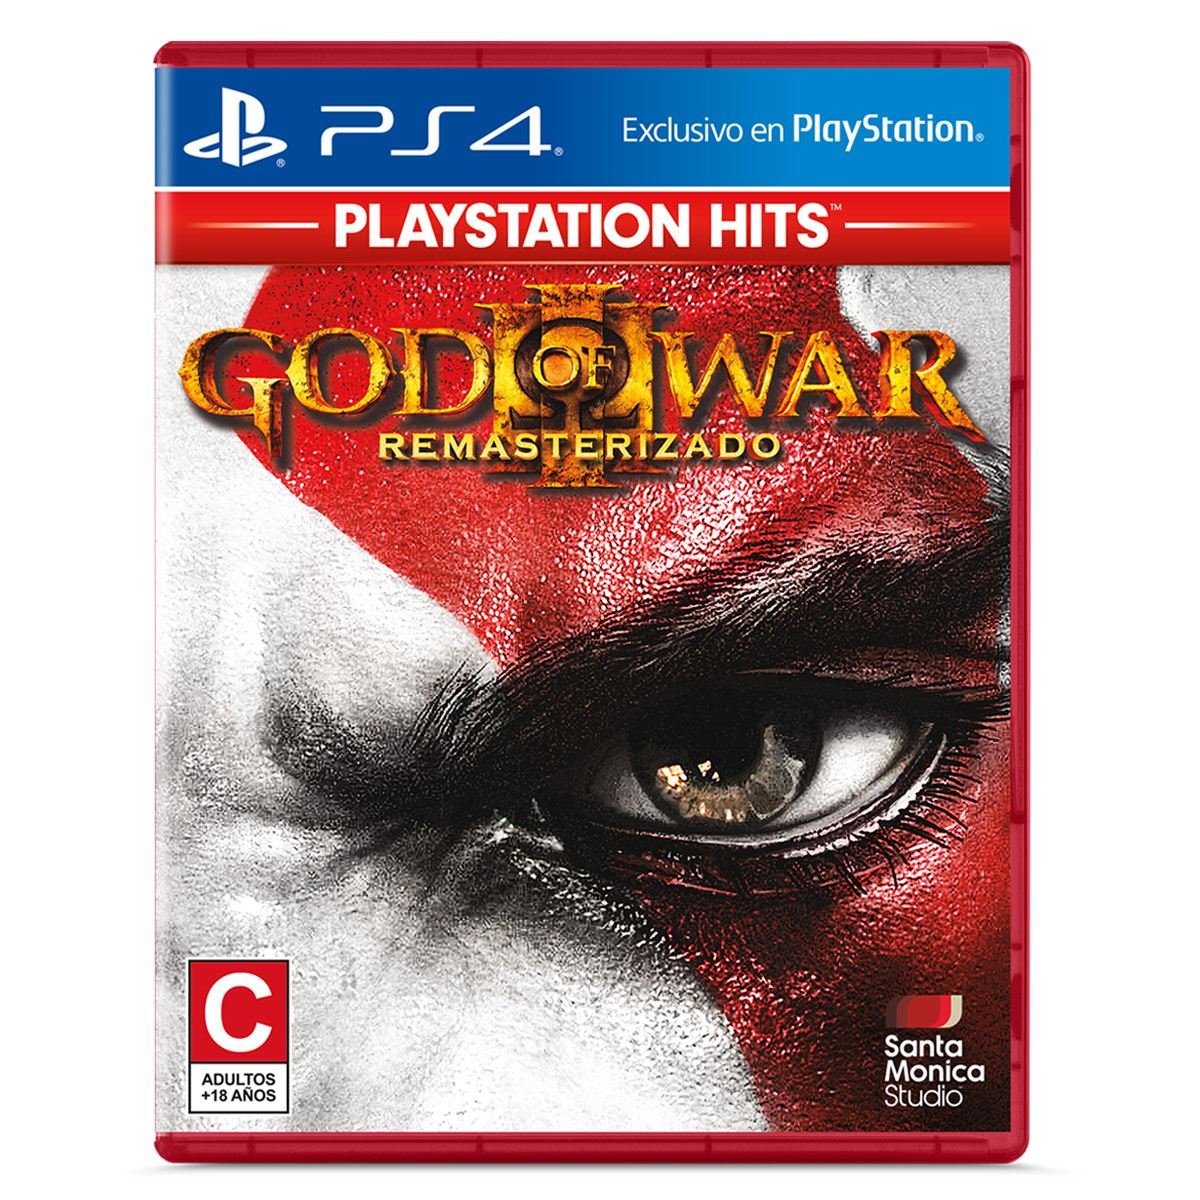 PS4 Hits God Of War III Remastered